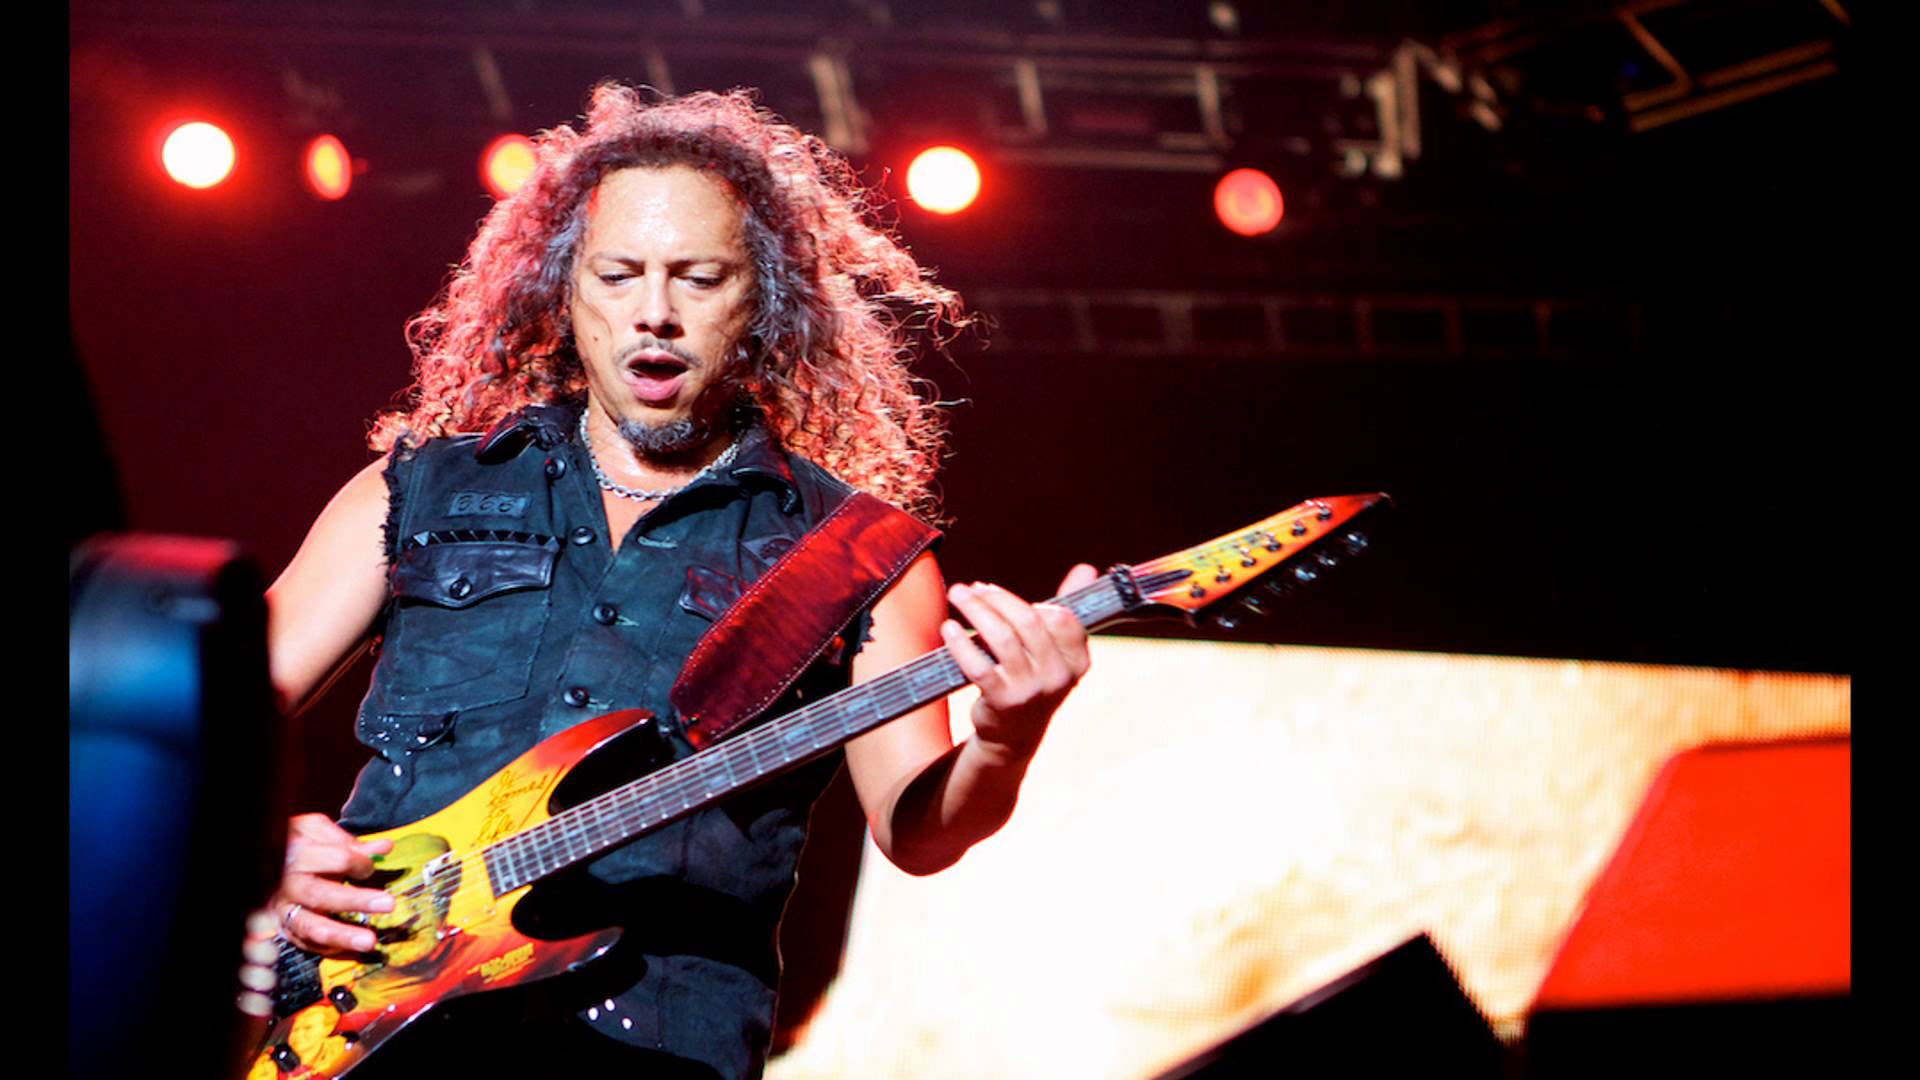 Download Wallpaper - Lead Guitarist Kirk Hammett , HD Wallpaper & Backgrounds